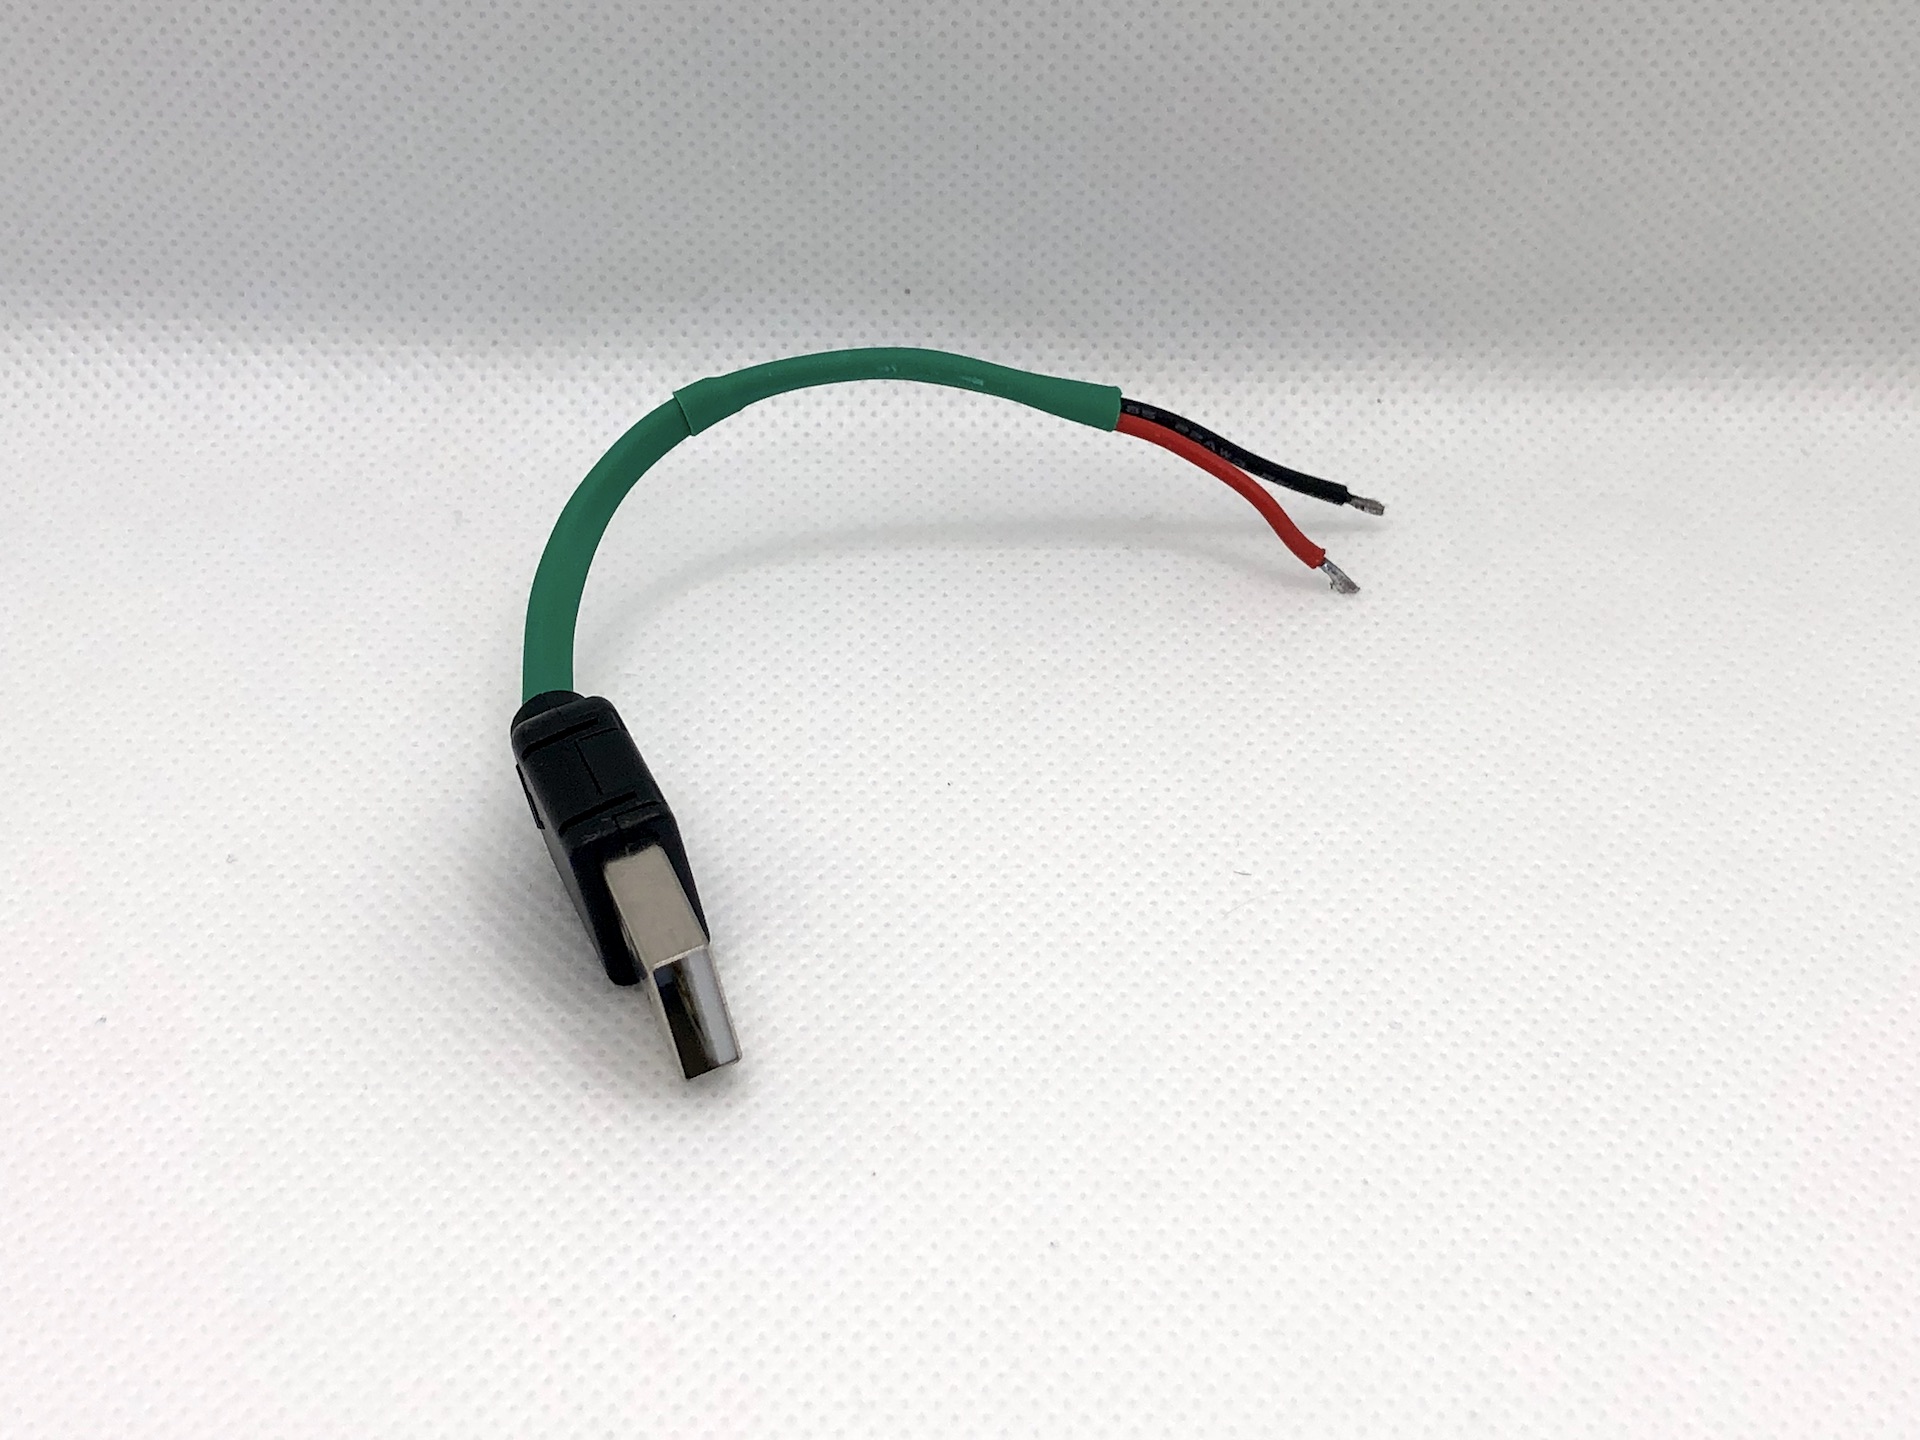 USB connector assembled